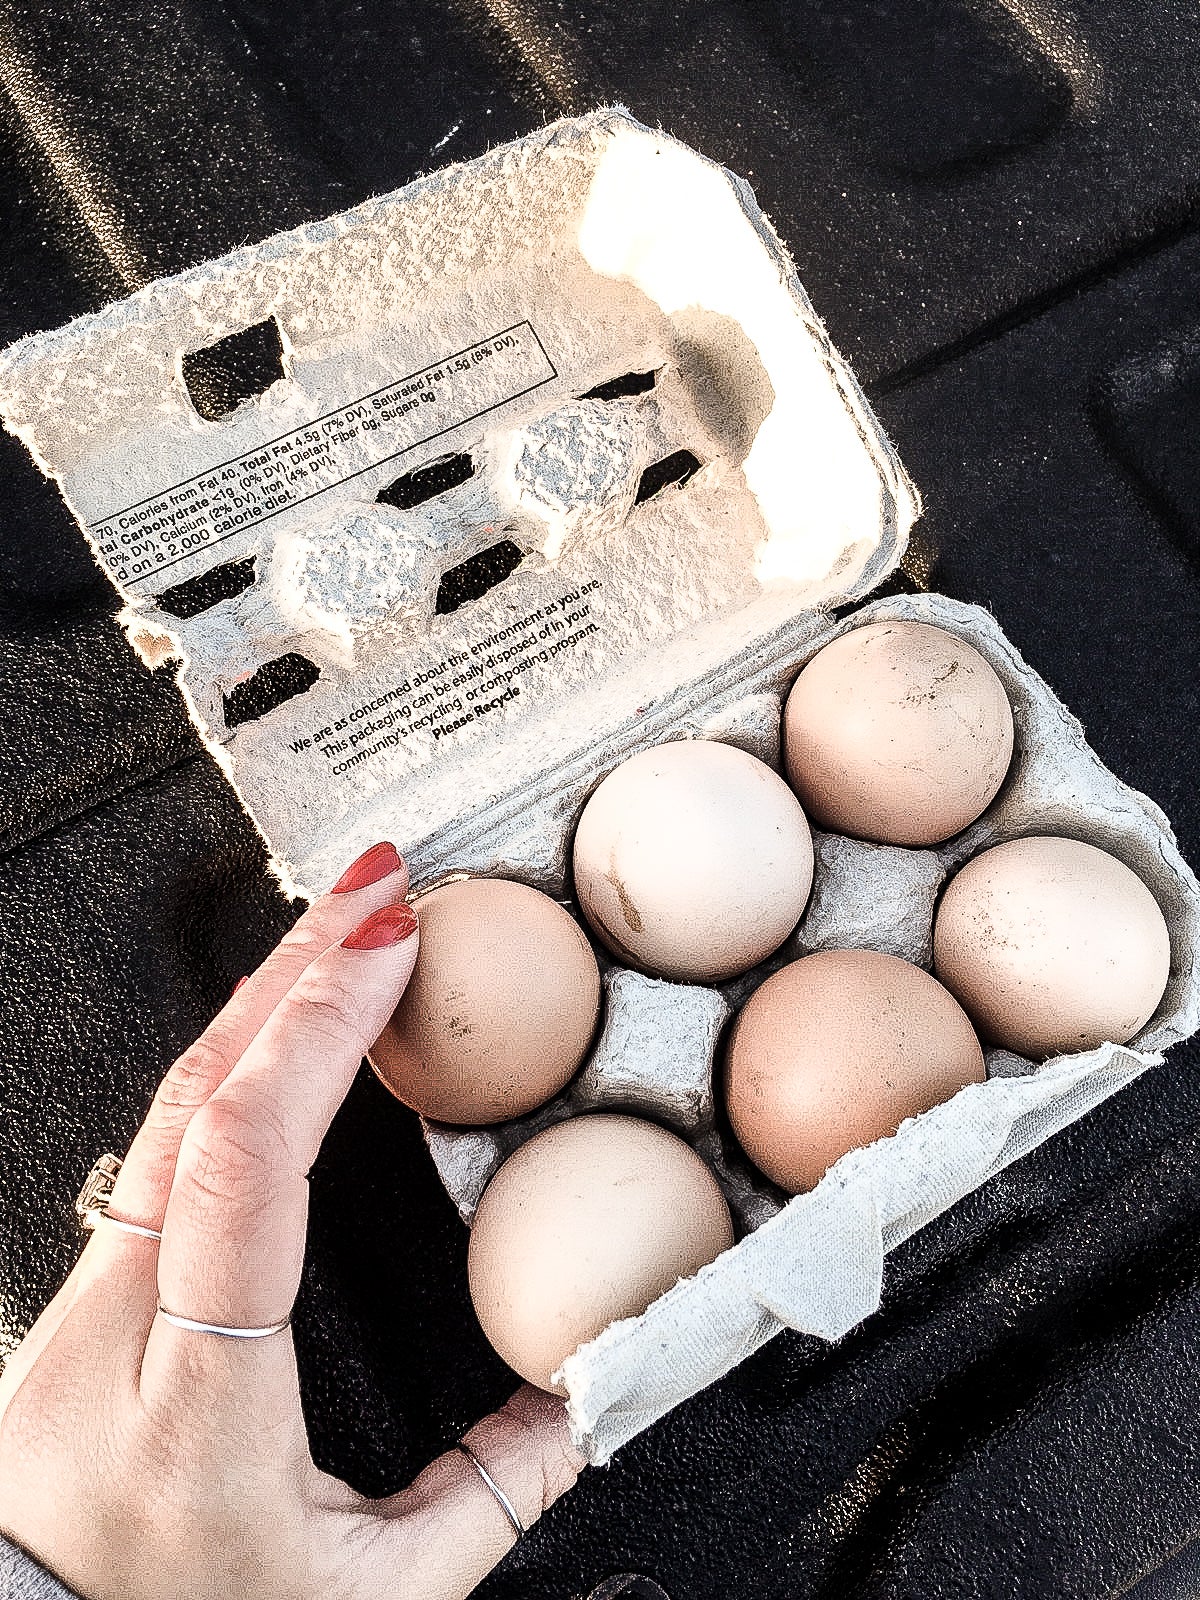 Farm fresh eggs! $2/half dozen or $4/full dozen